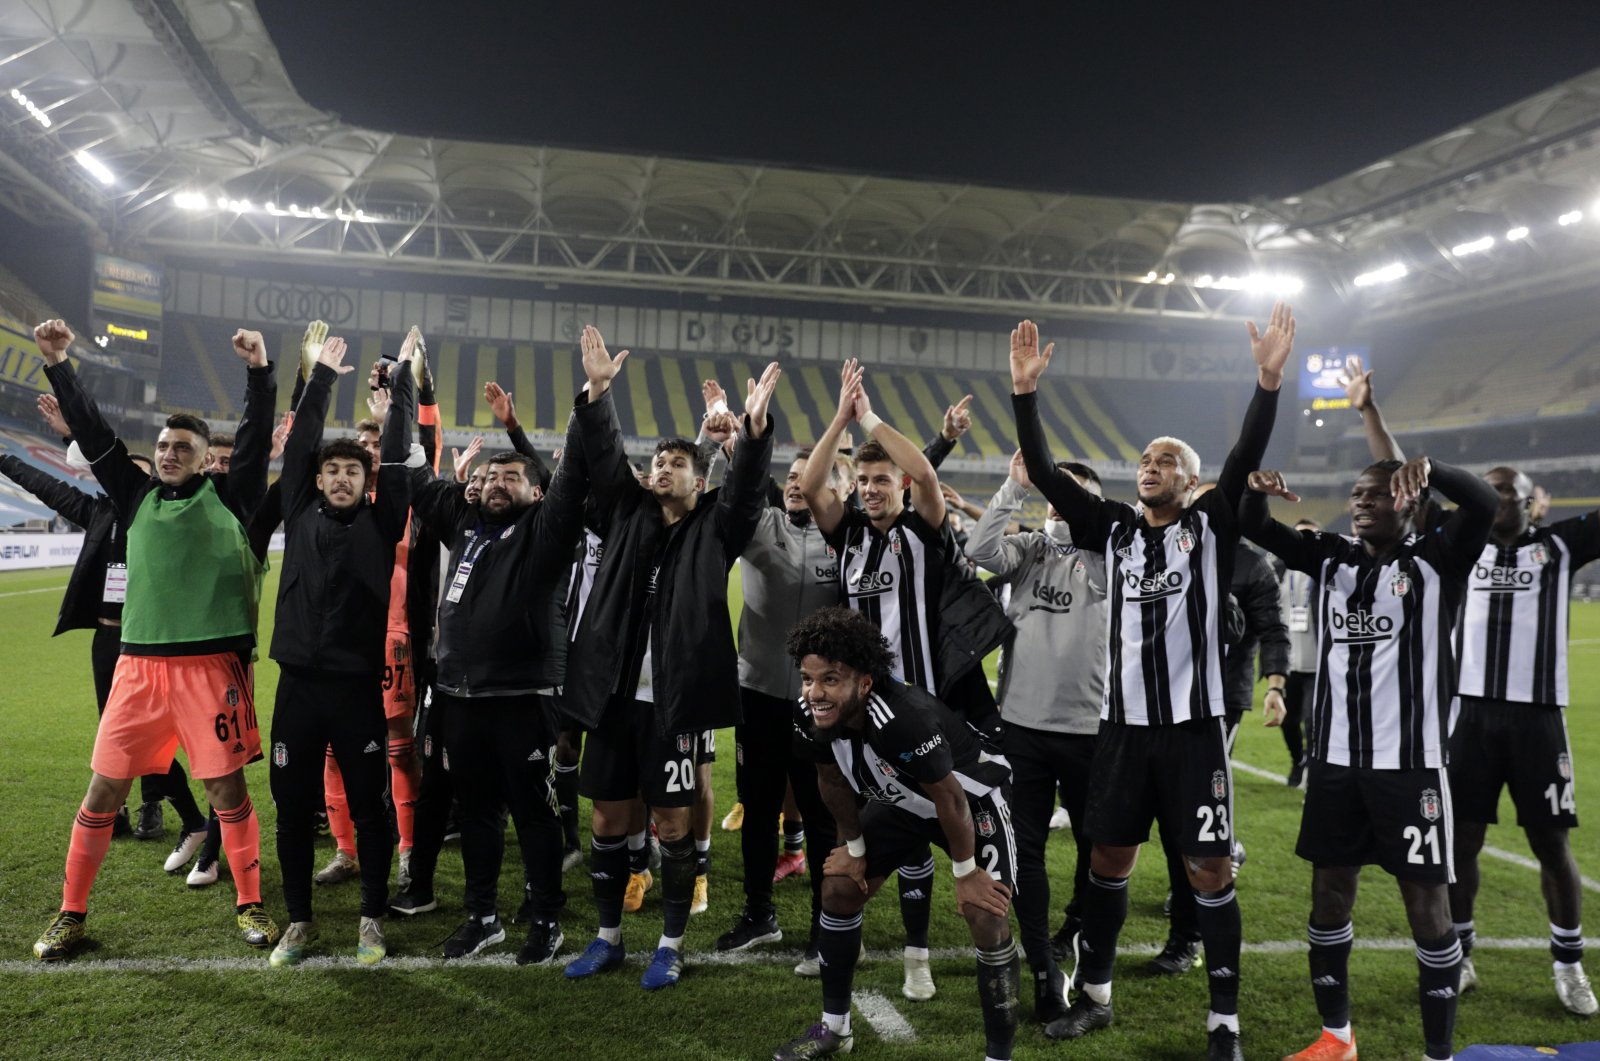 Beşiktaş players celebrate their Süper Lig victory against Fenerbahçe in front of visitor stands at the Ülker Şükrü Saraçoğlu Stadium in Istanbul, Nov. 30, 2020. (AA Photo)